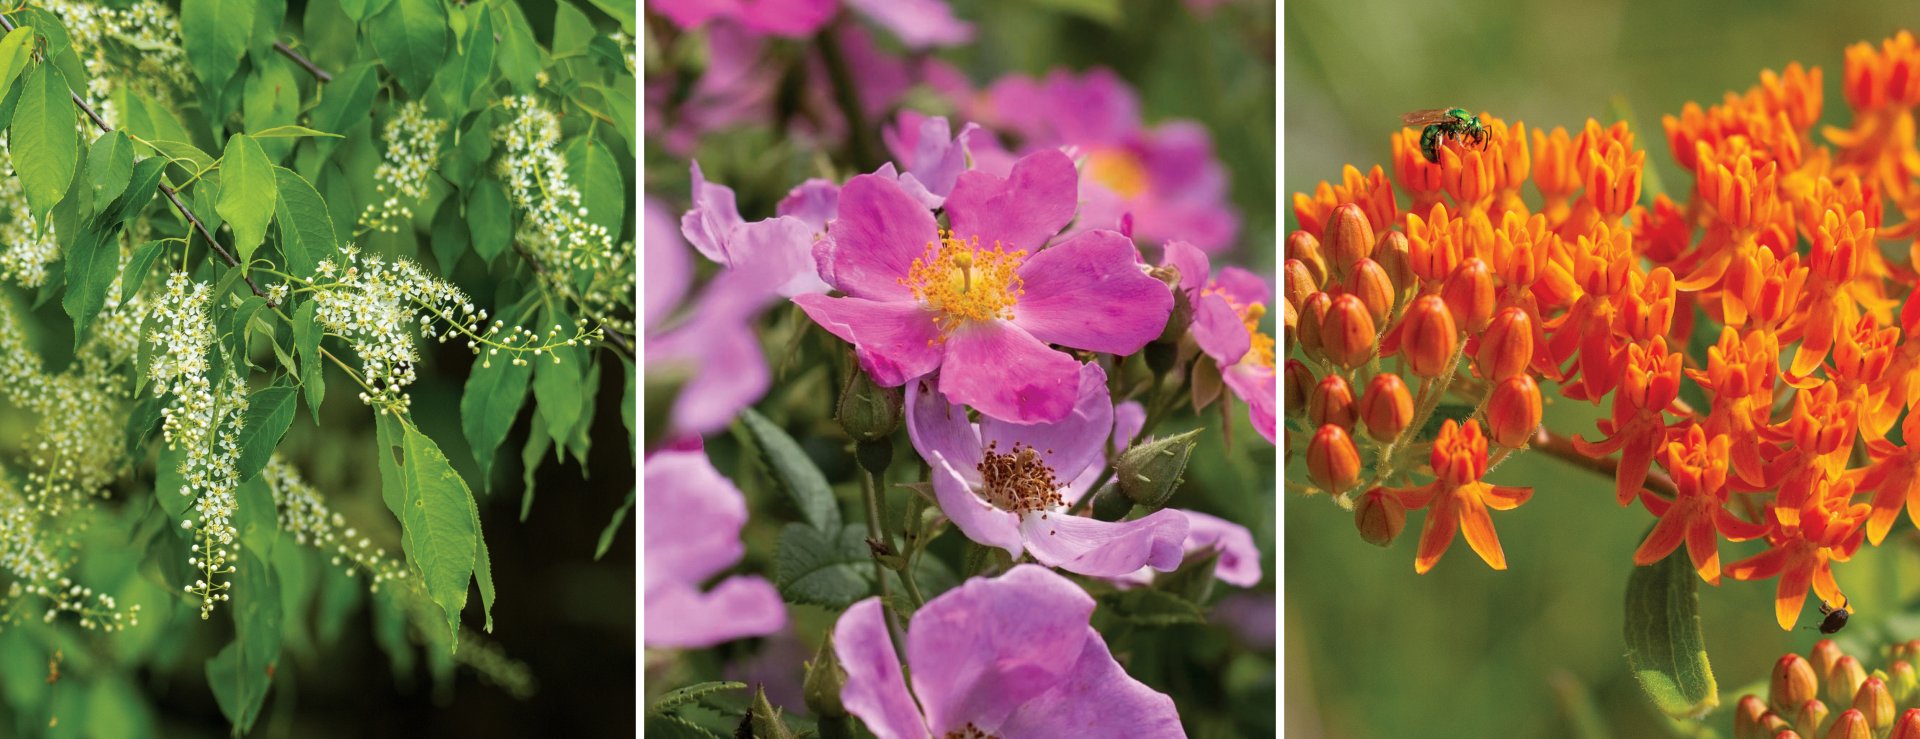 Collage of three native plant photos